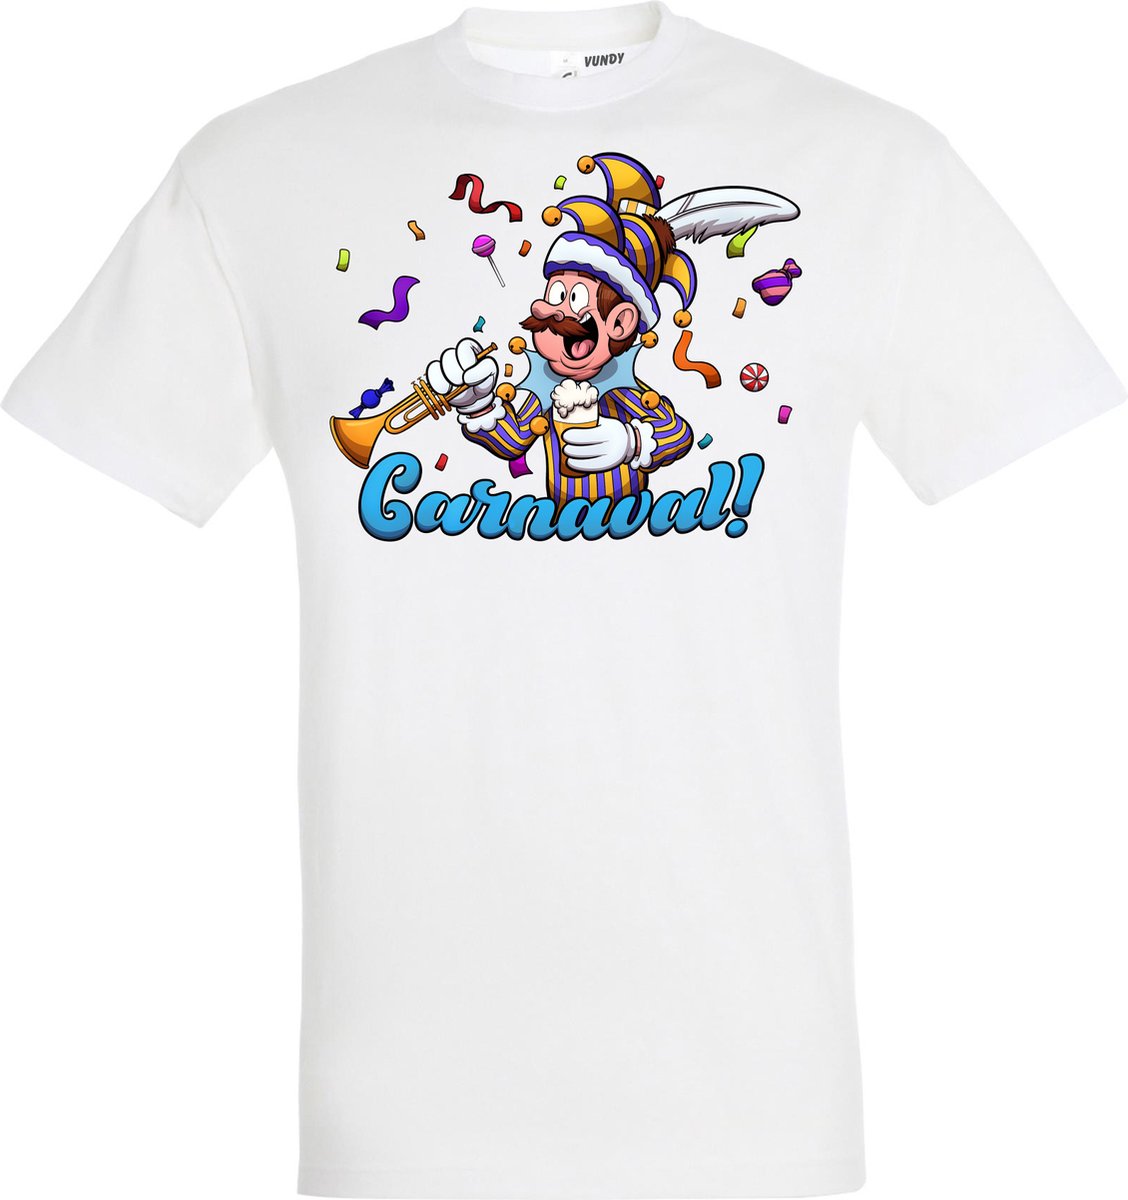 T-shirt Carnavalluh | Carnaval | Carnavalskleding Dames Heren | Wit | maat 4XL